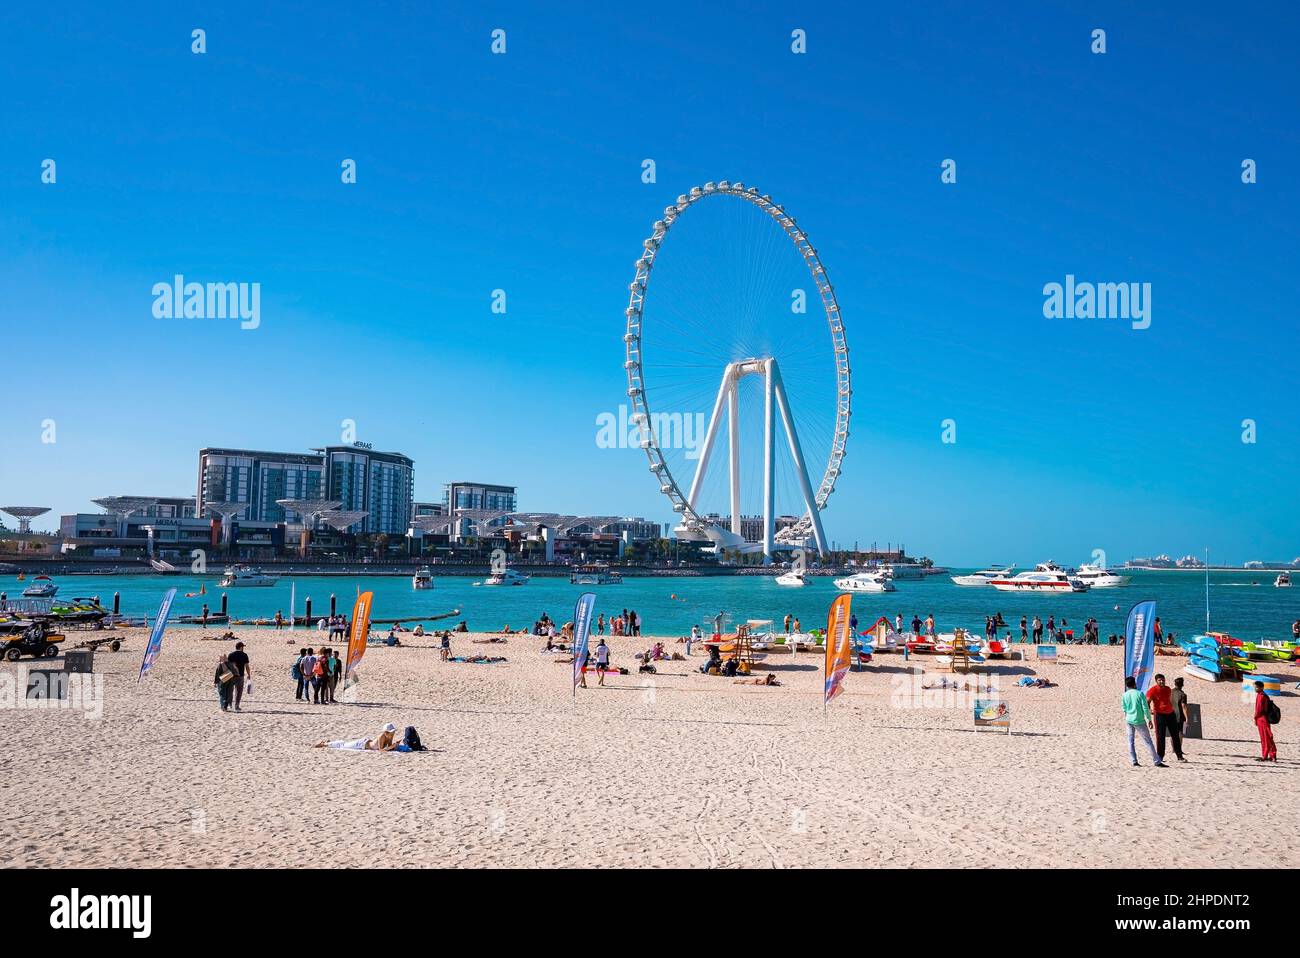 Ain Dubai, the biggest ferris wheel in the world. Stock Photo